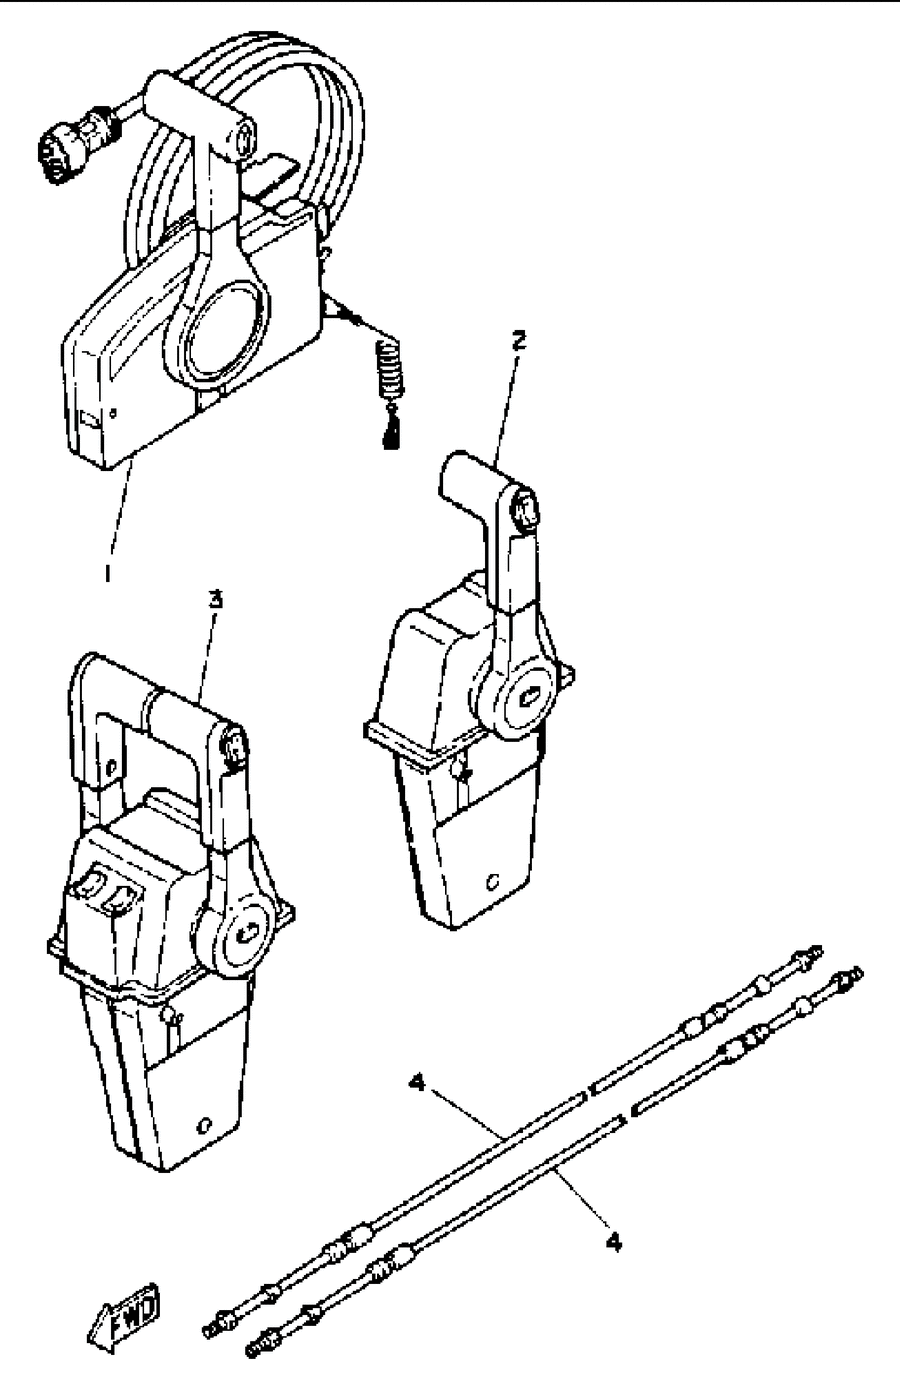 1988 L150ETXG REMOTE CONTROL CABLES